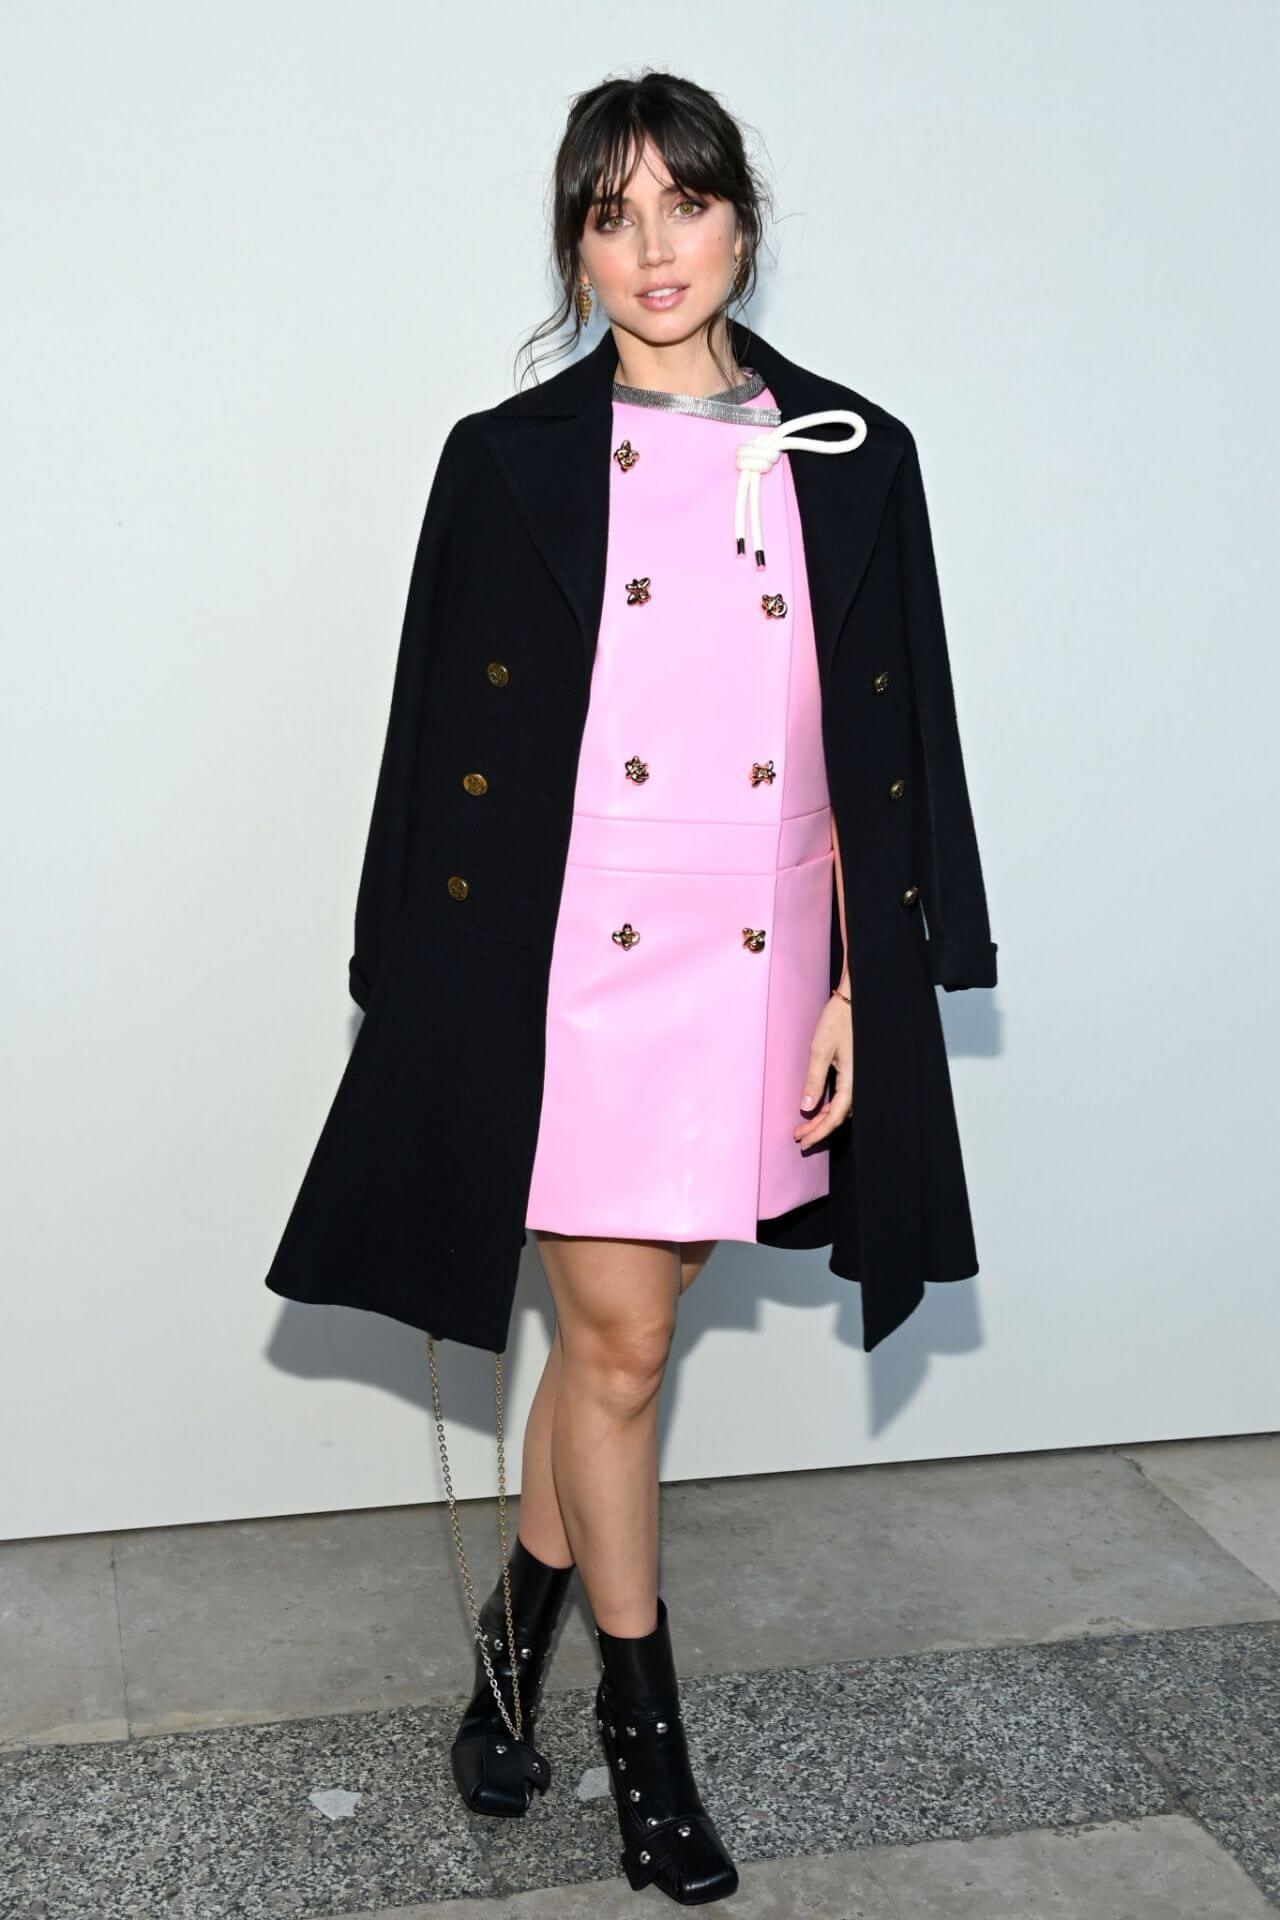 Ana de Armas In Pink Short Dress With Black Blazer At Louis Vuitton Fashion Show in Paris